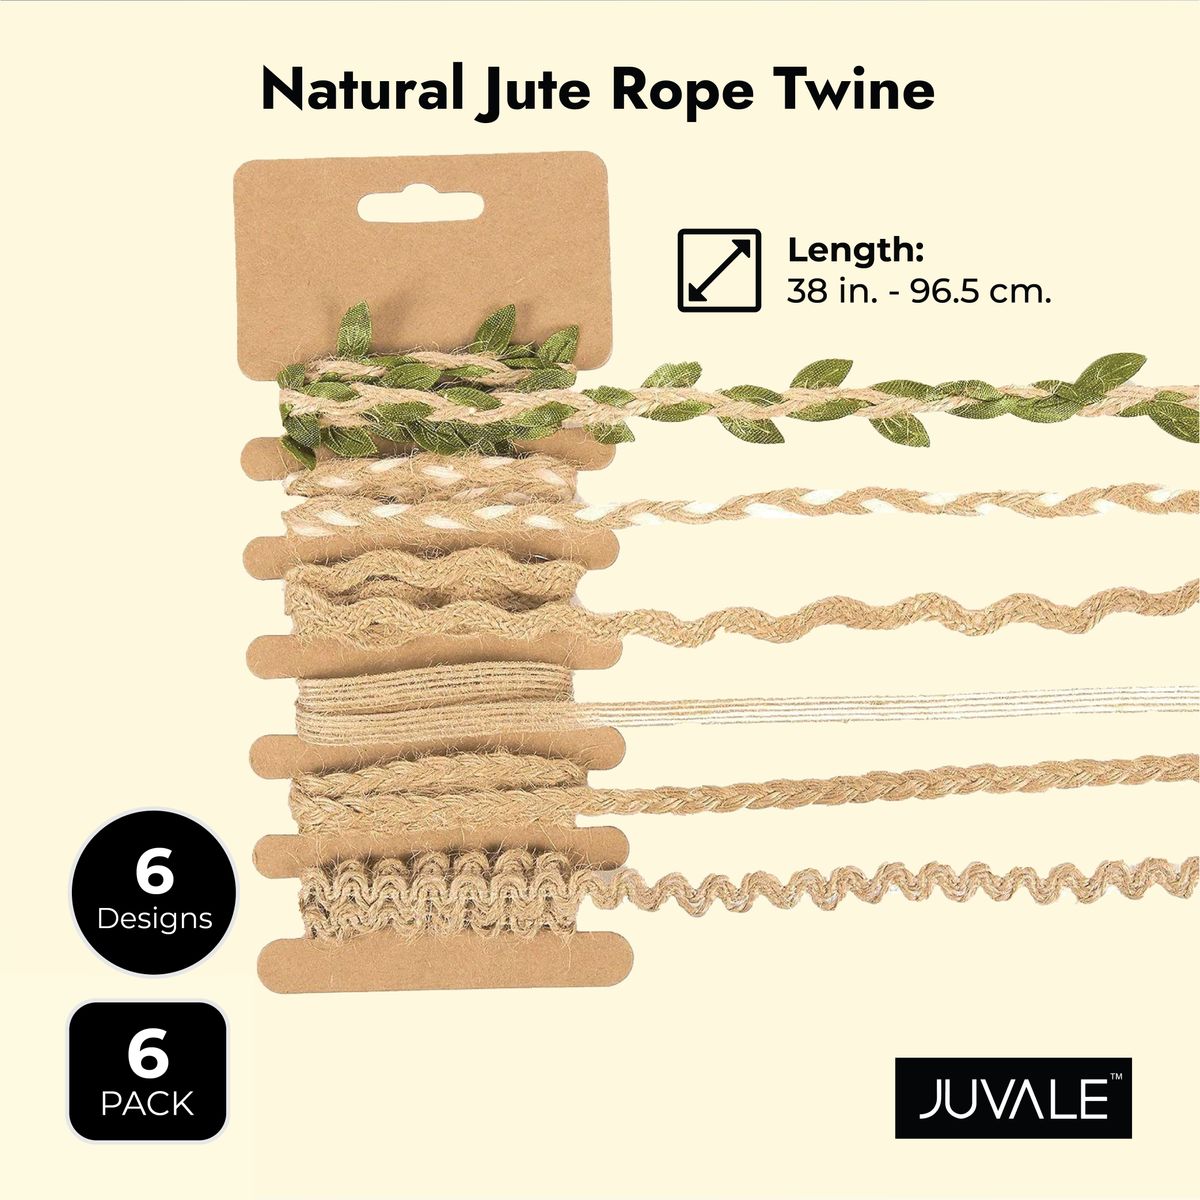 Natural Jute Burlap Ribbon 3 inches Red - Packaging Decor